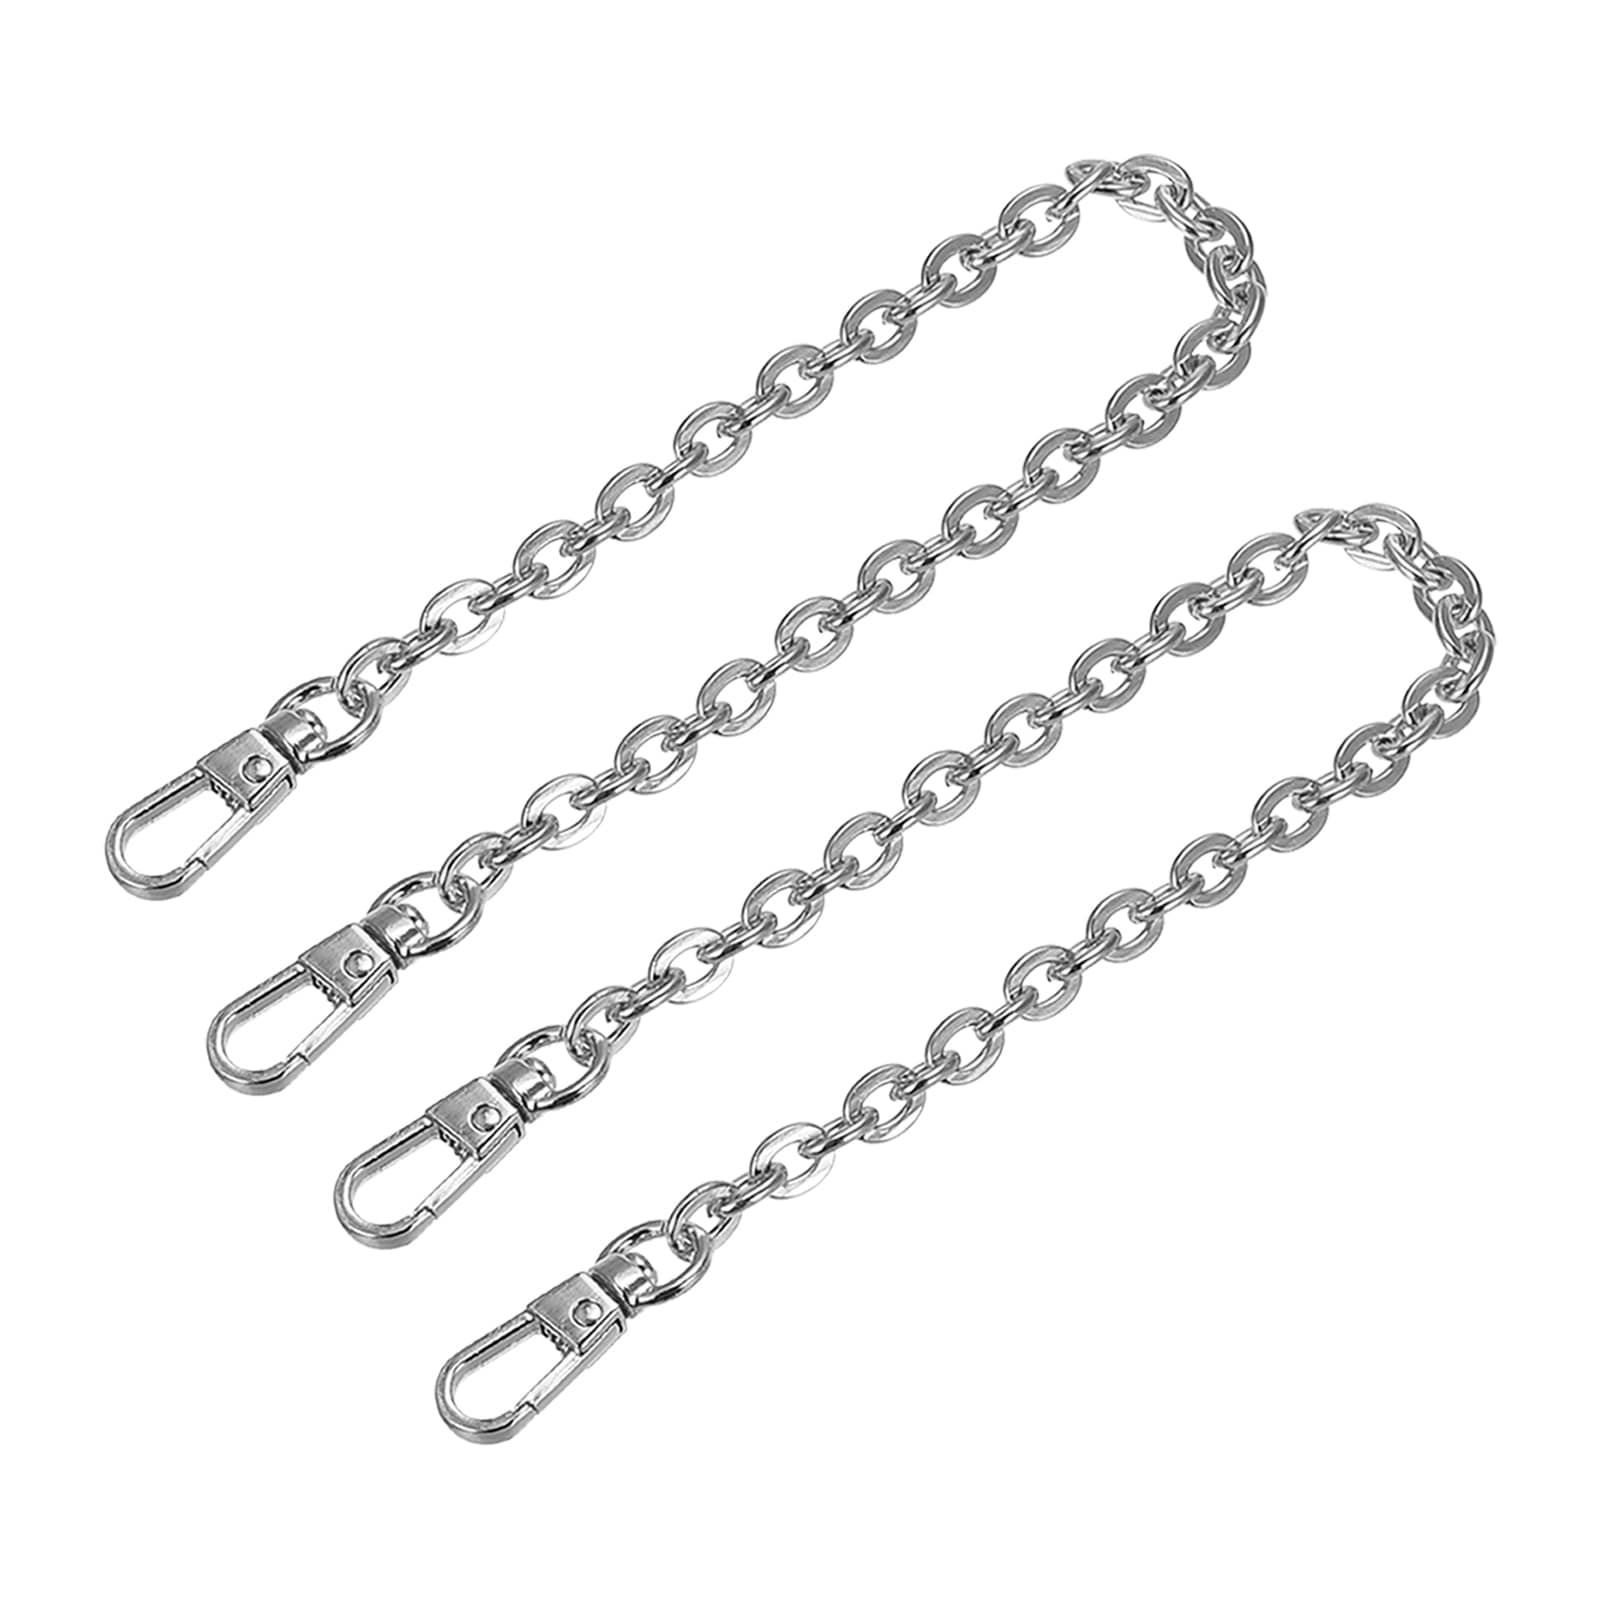 O Shape Bag Chain - 6mm Metal Replacement Purse Chain Shoulder